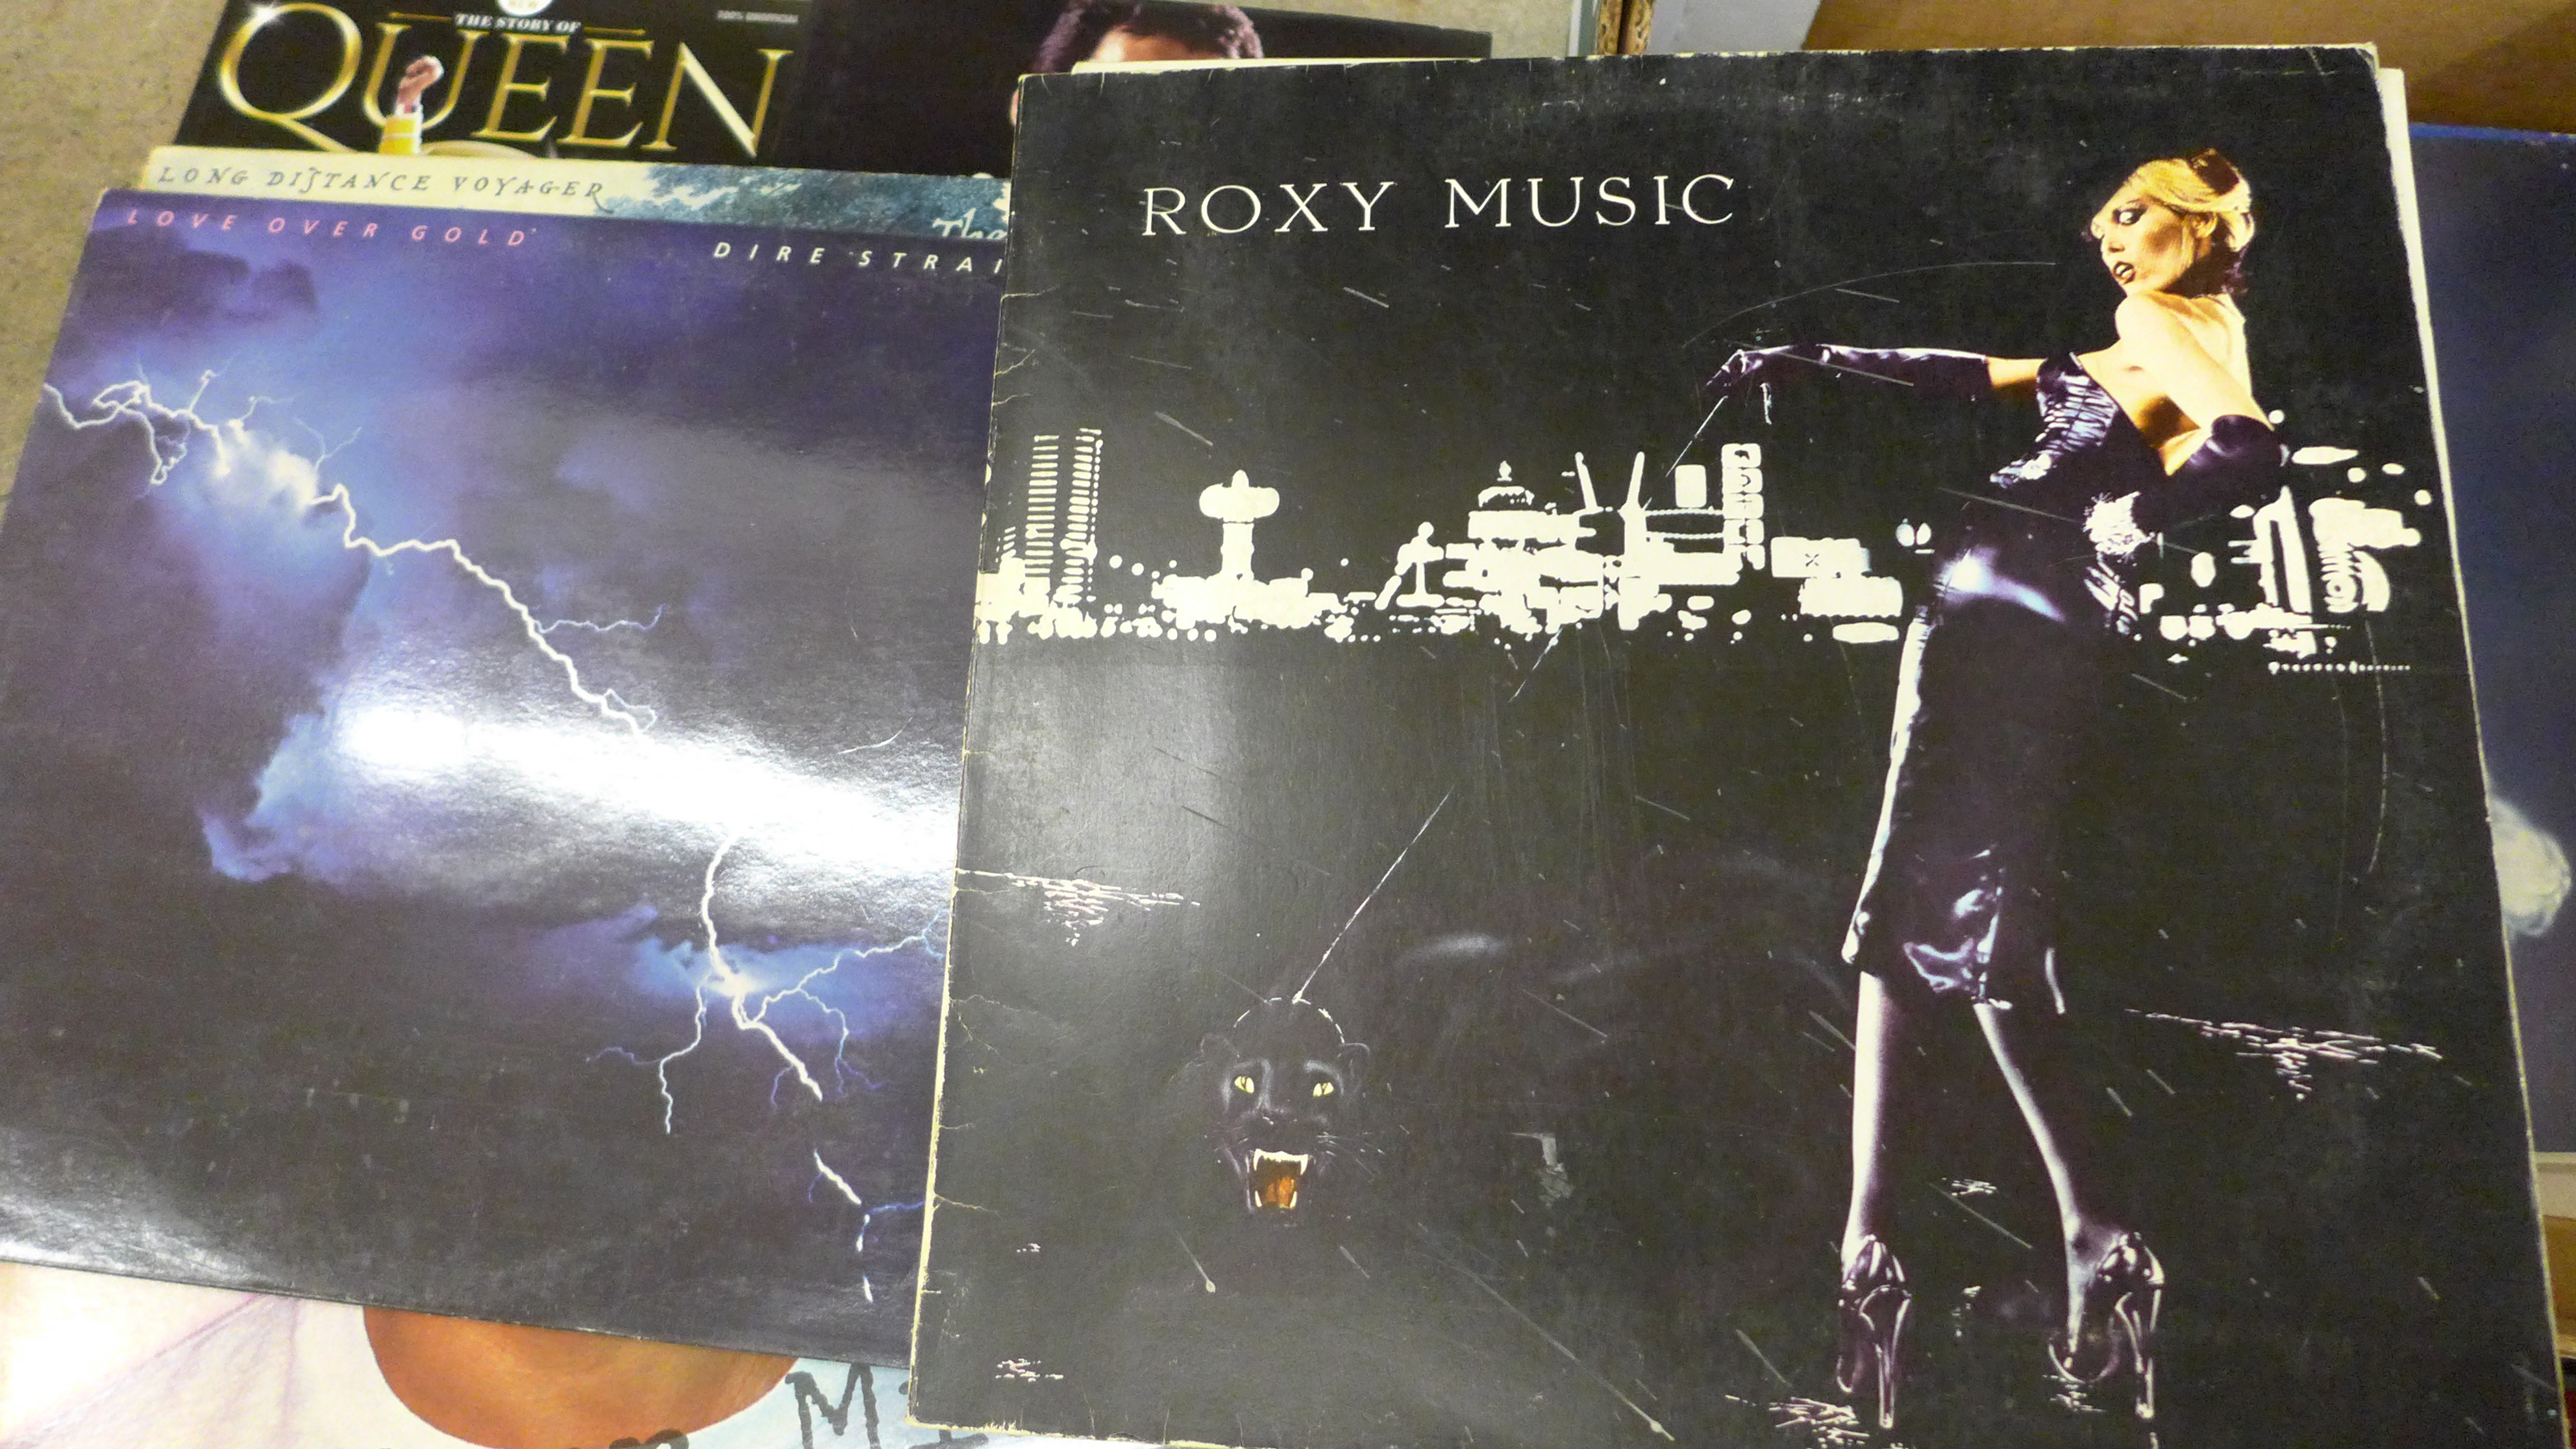 ELO CDs, mixed LP records including Bryan Ferry, Dire Straits, UB40, Moody Blues, Queen, plus - Bild 4 aus 4